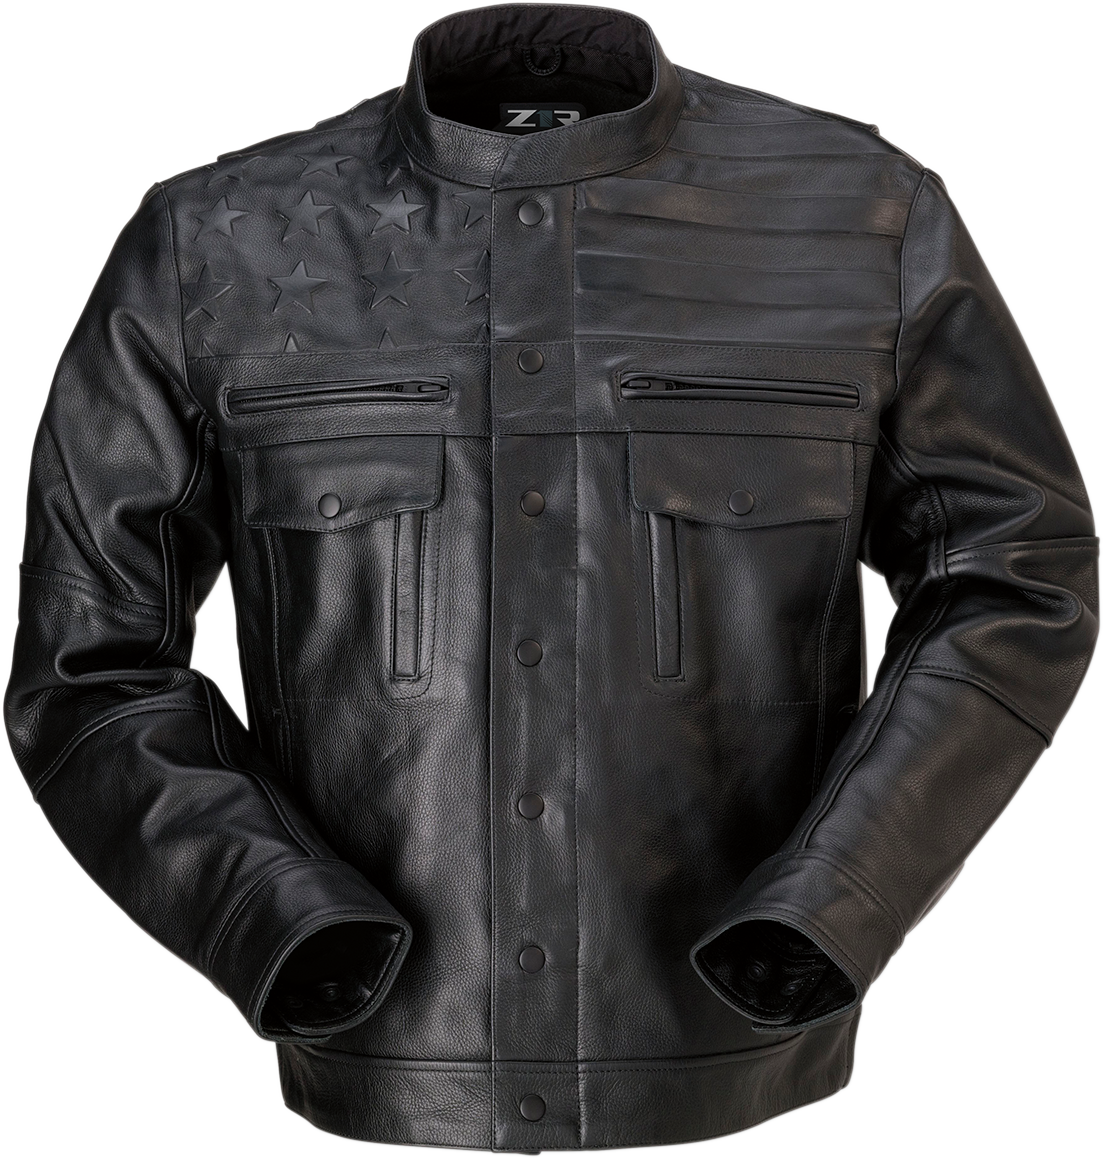 Z1R Deagle Leather Jacket - Black - Medium 2810-3758